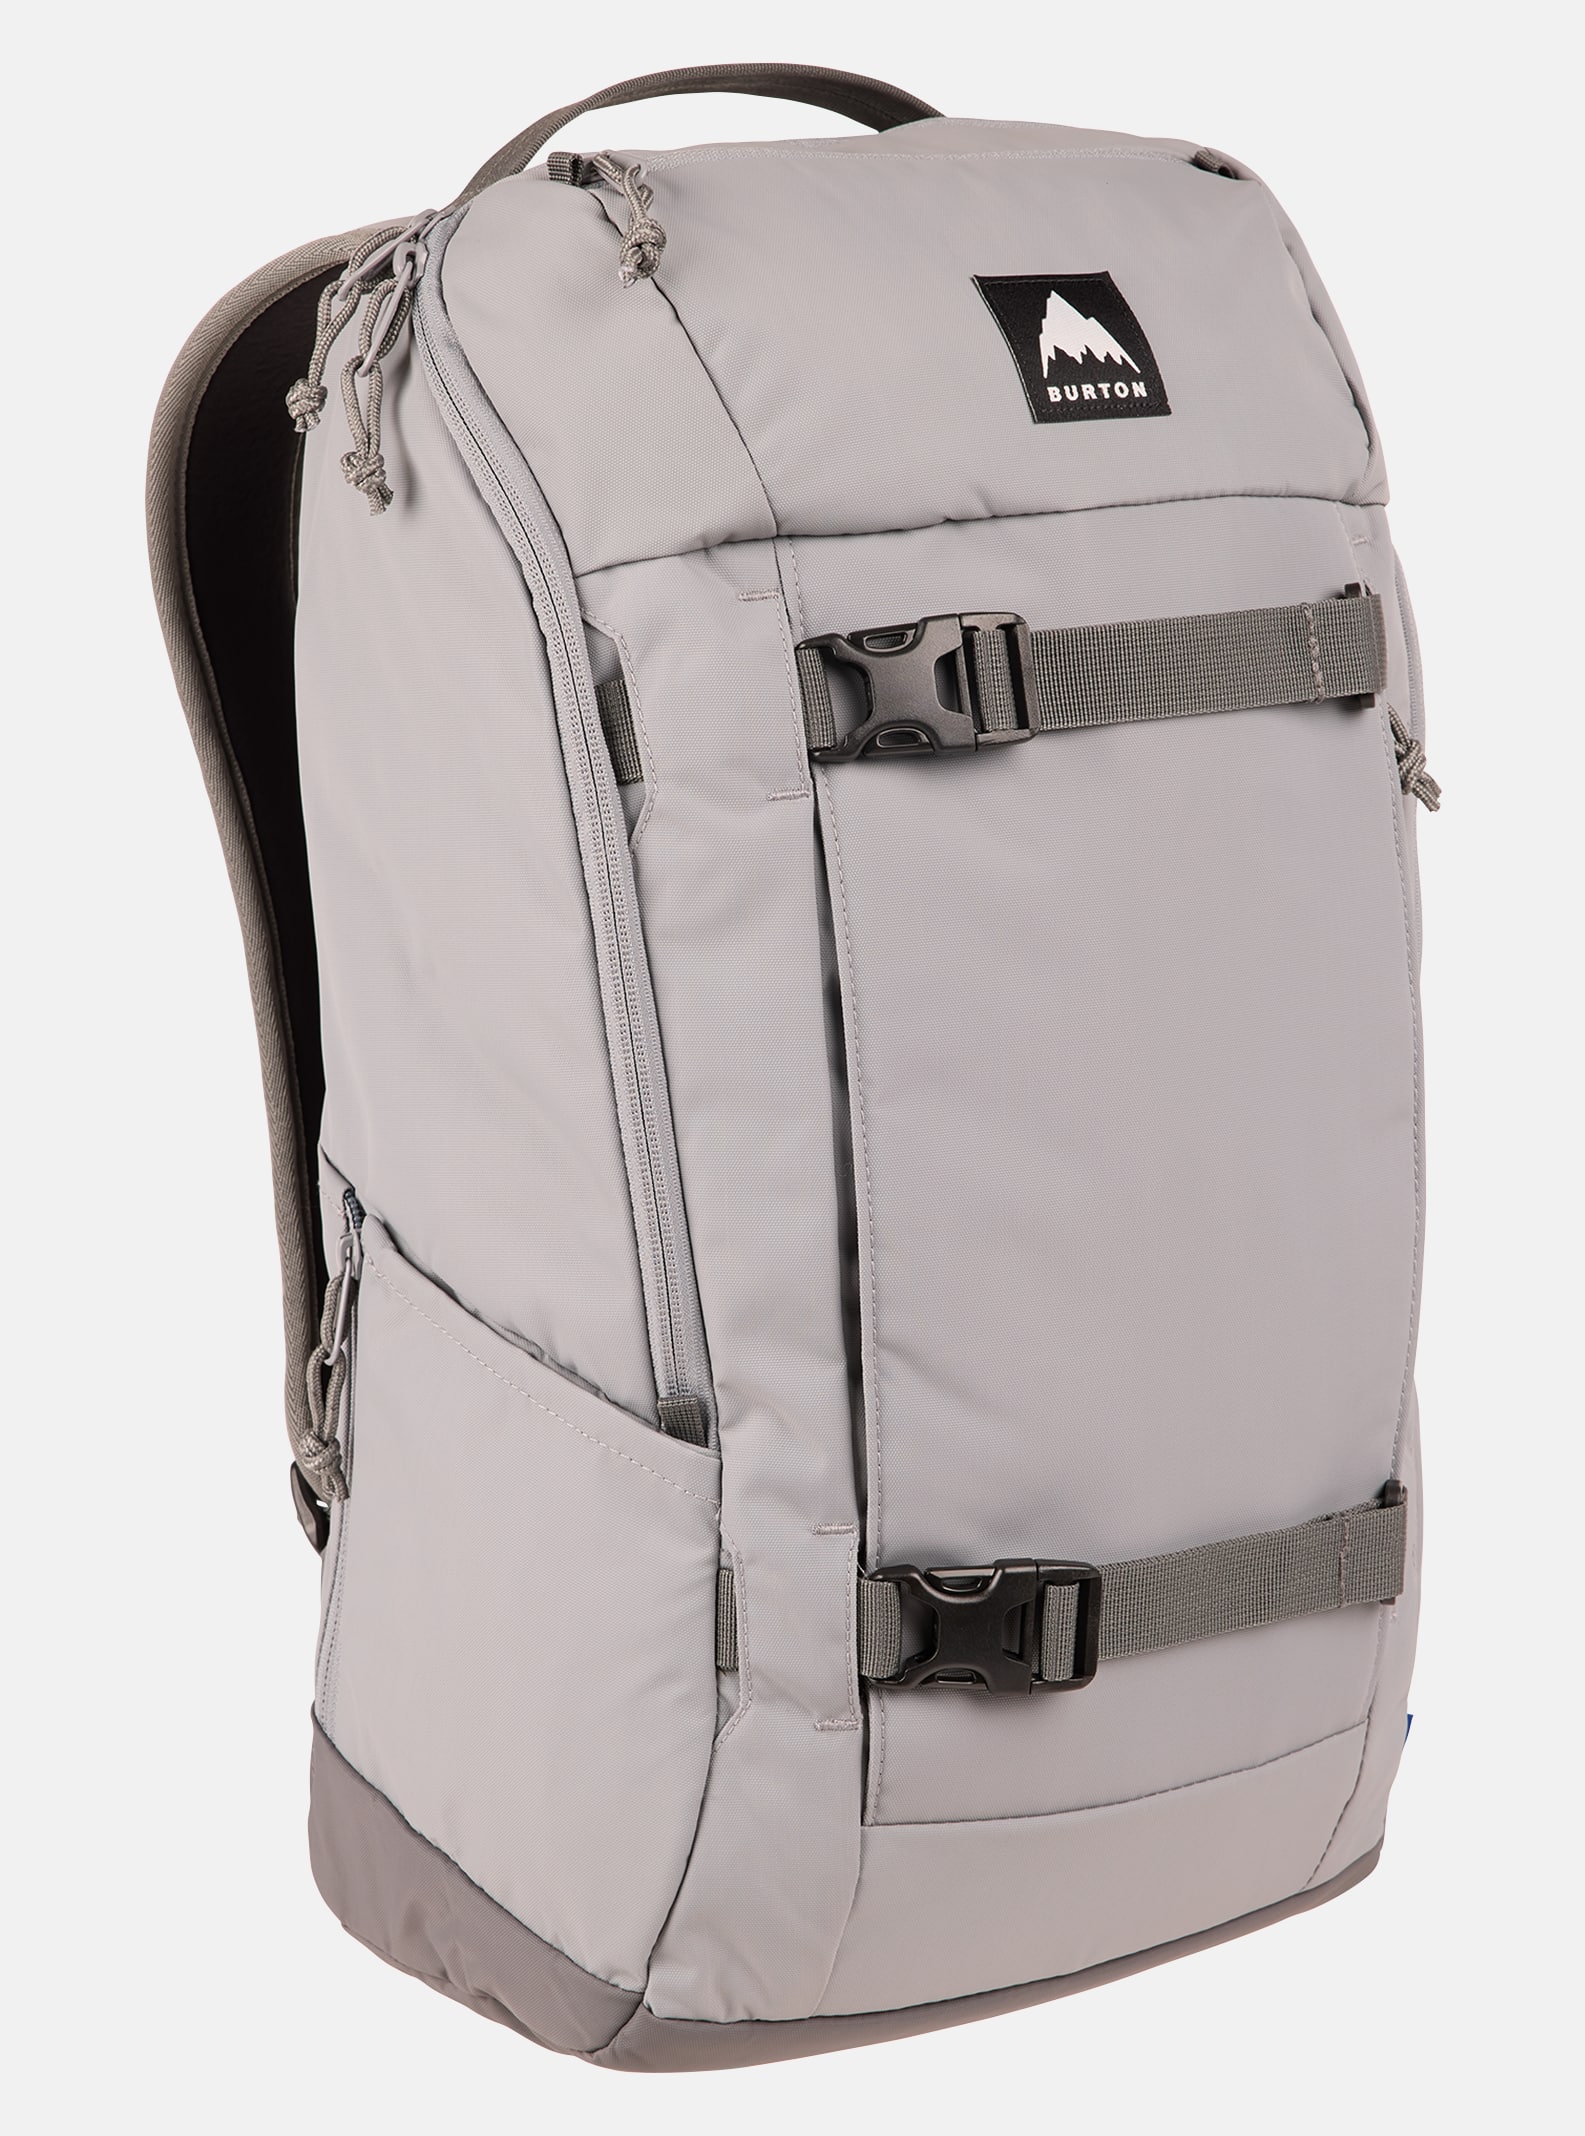 Kilo 2.0 27L Backpack | Burton.com Winter 2023 US